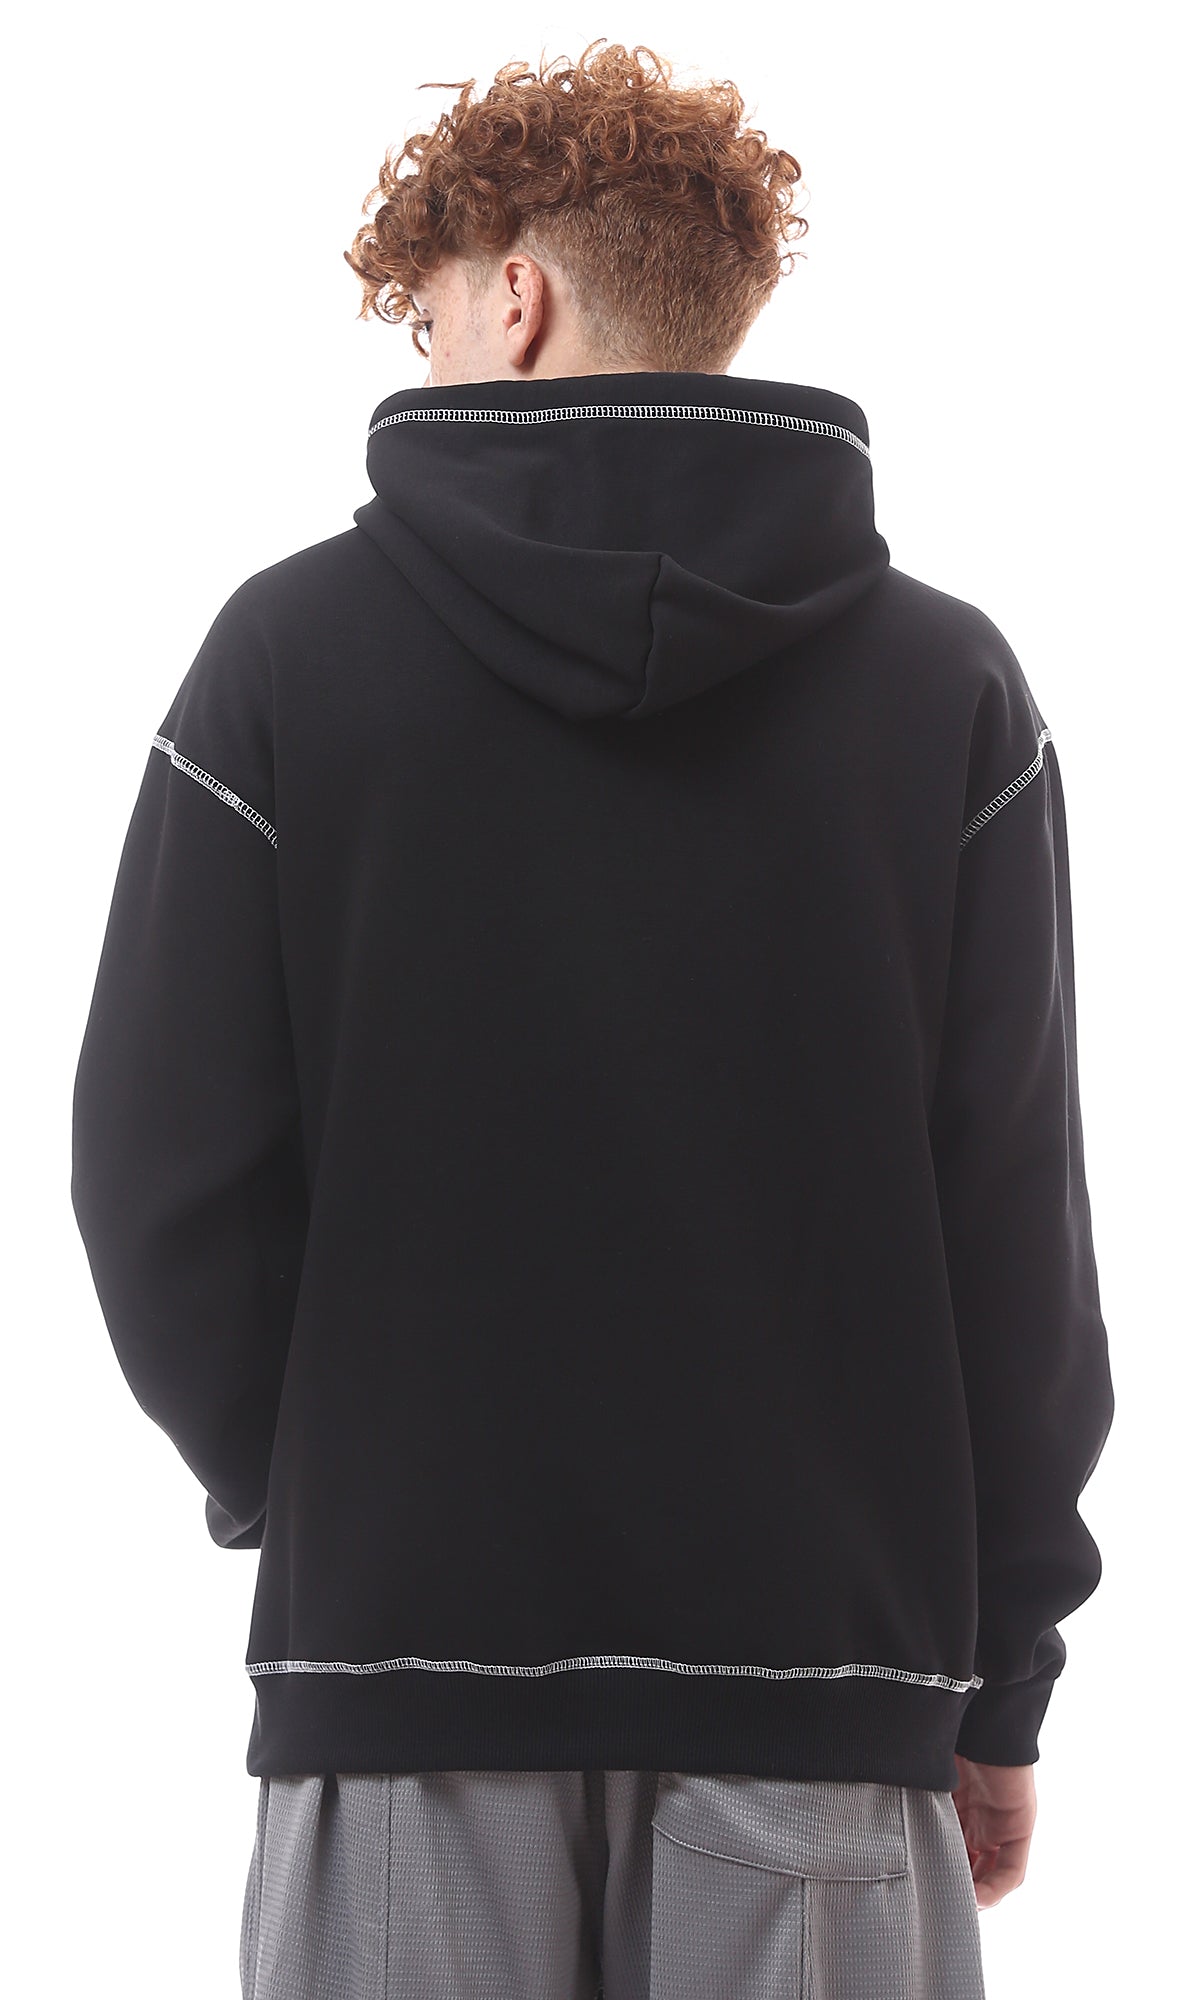 O176277 Solid Black Hoodie With Kangaroo Pocket